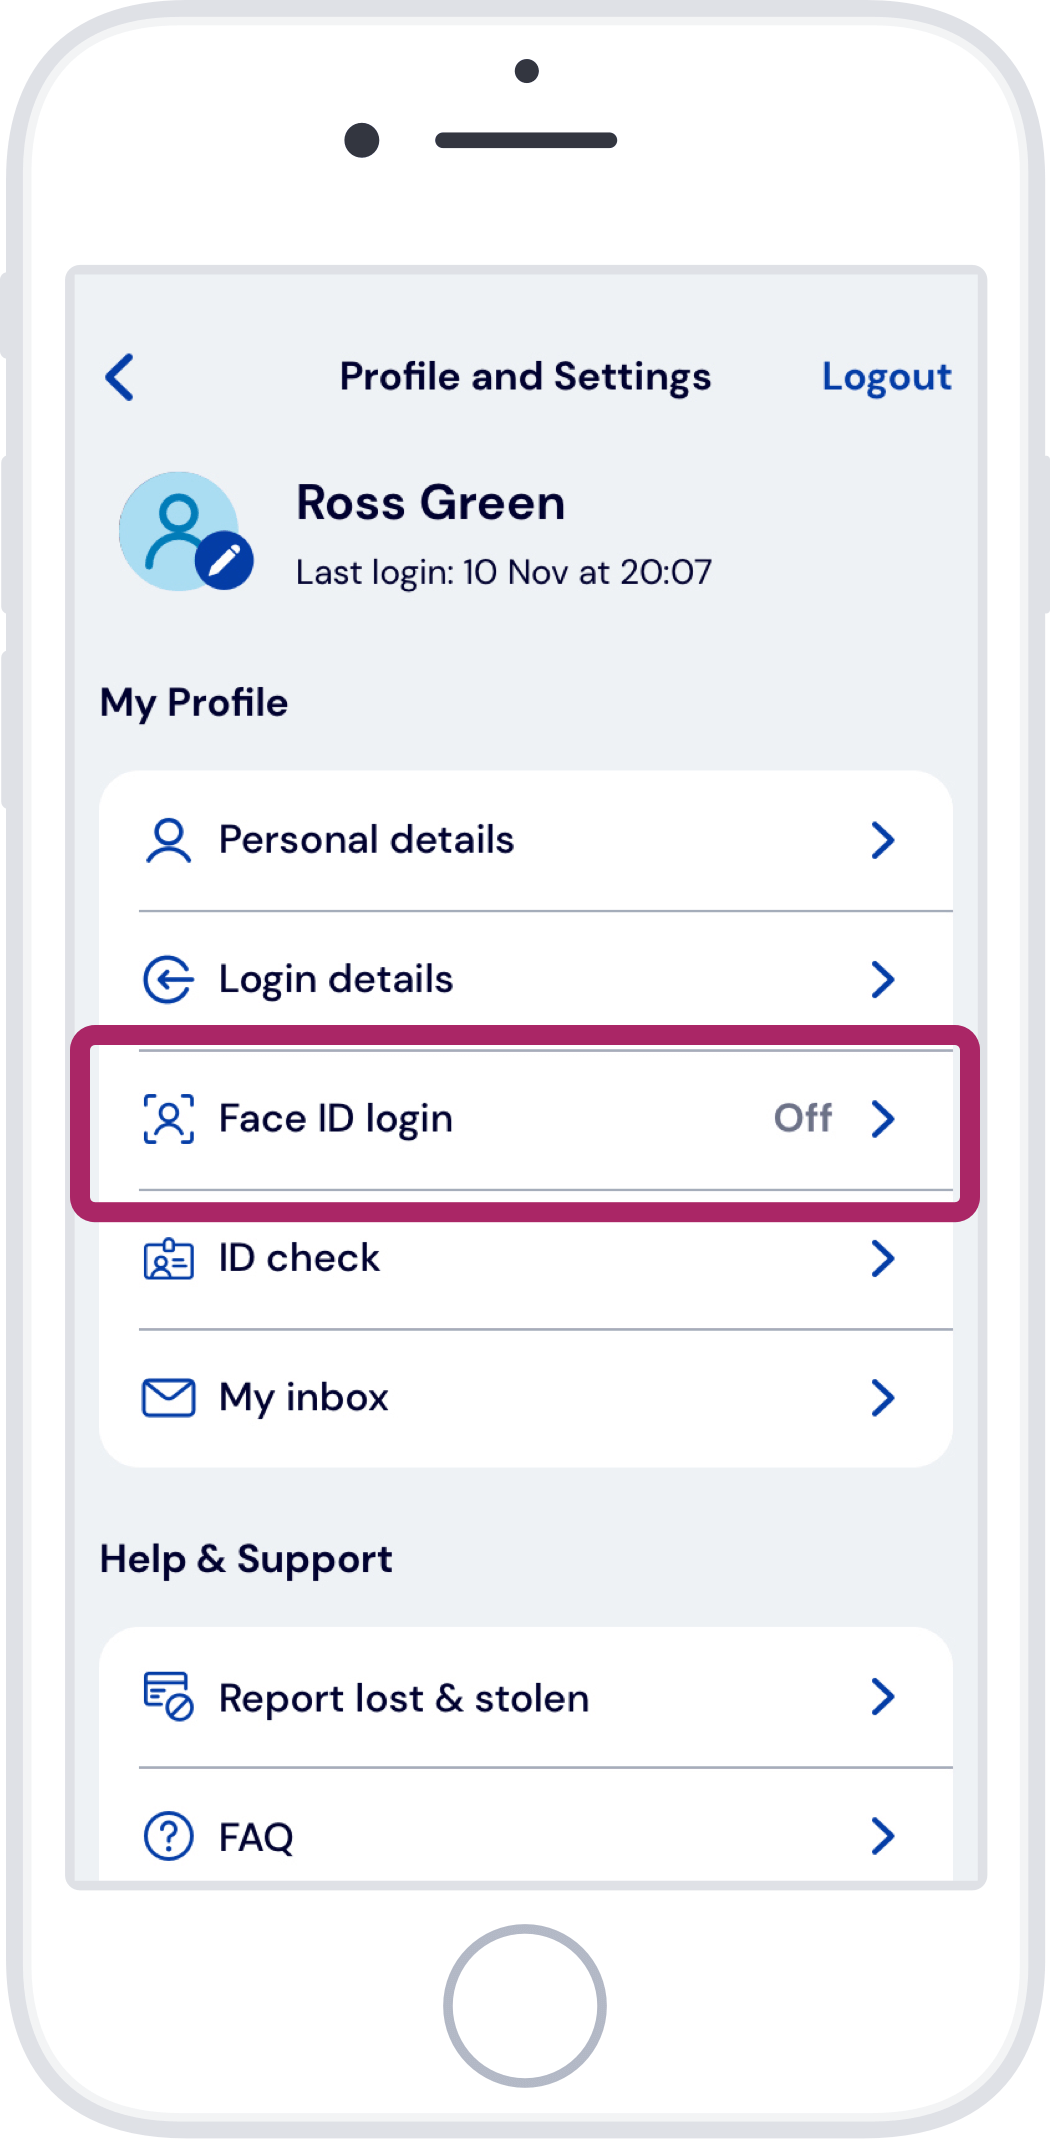 Tap Face ID login.